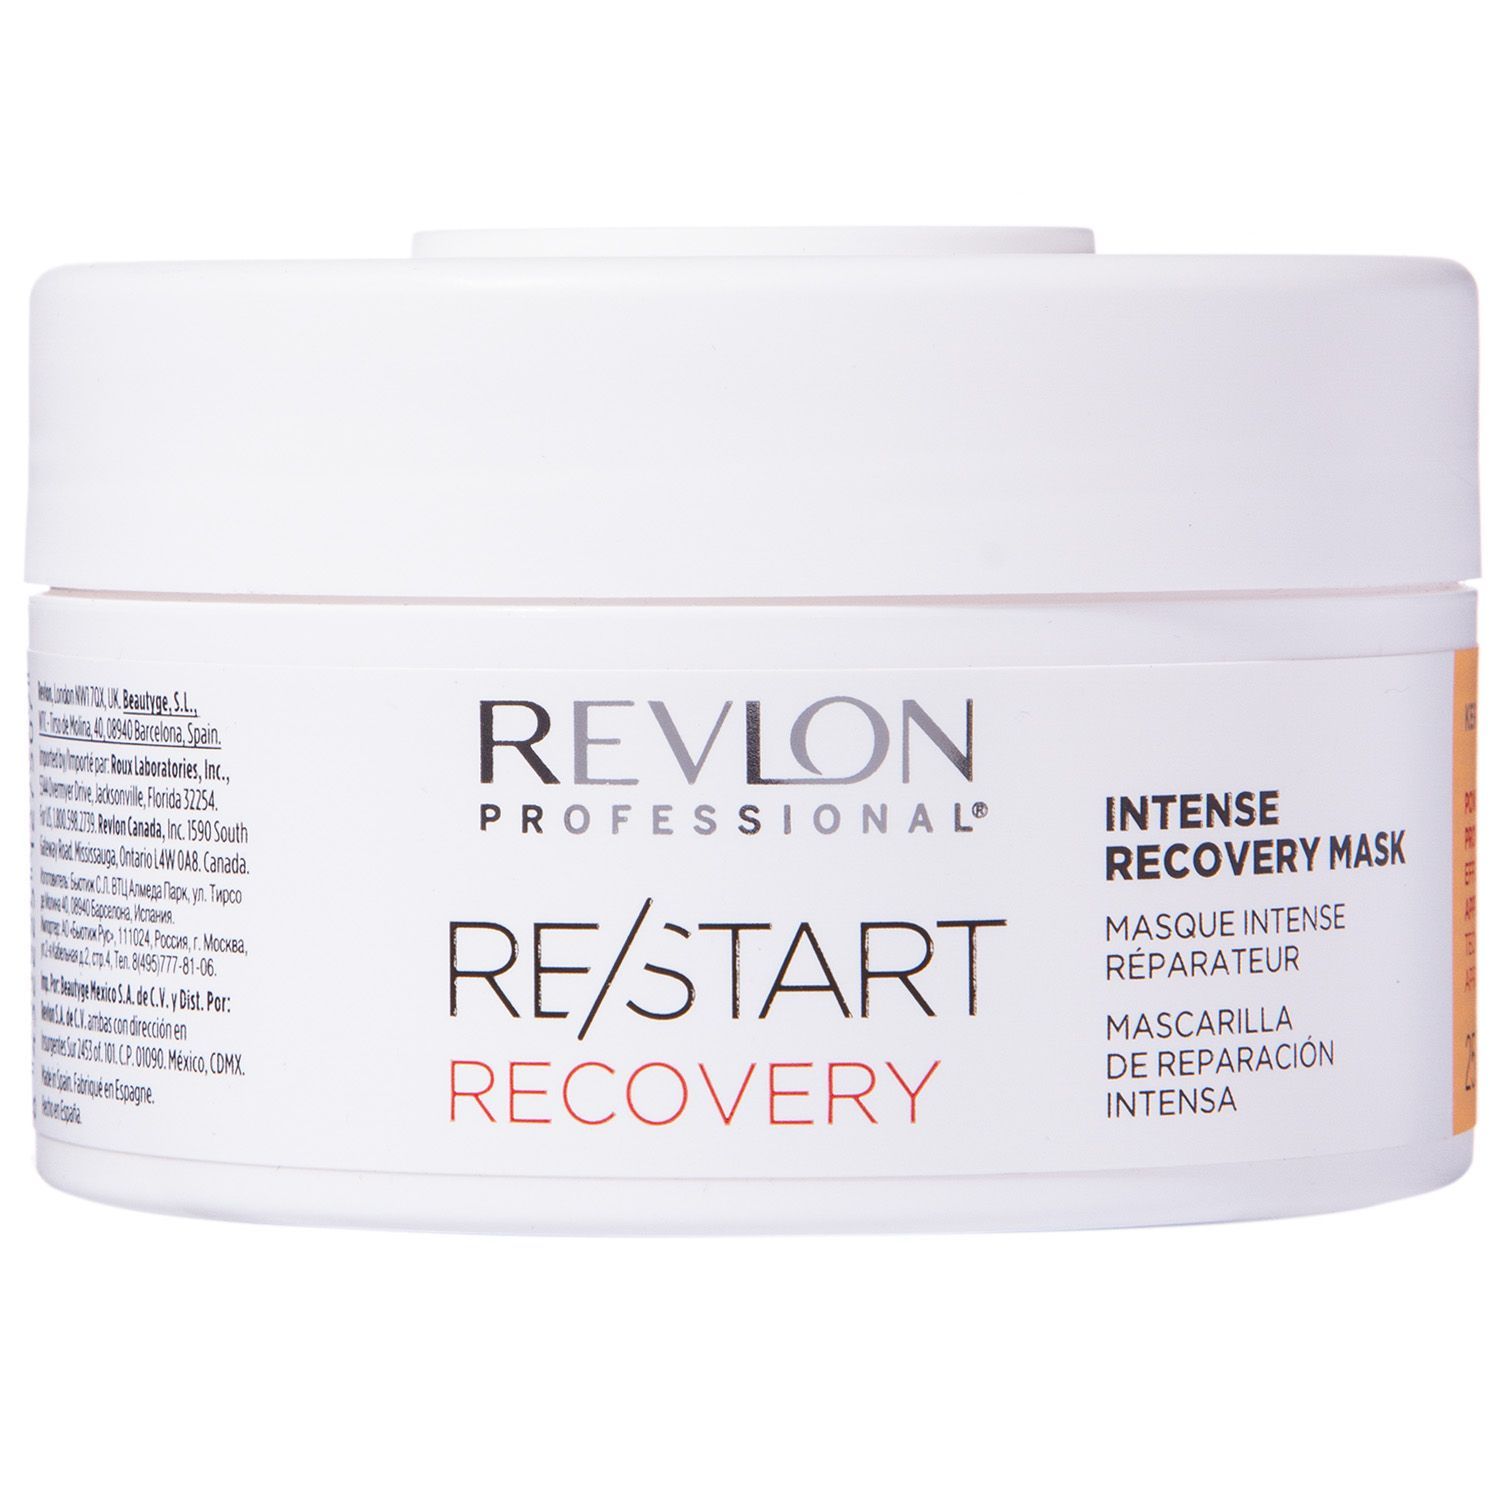 Revlon Professional ReStart Recovery Intense Recovery Mask - Интенсивная восстанавливающая маска 250 мл revlon professional restart recovery intense recovery mask интенсивная восстанавливающая маска 500 мл